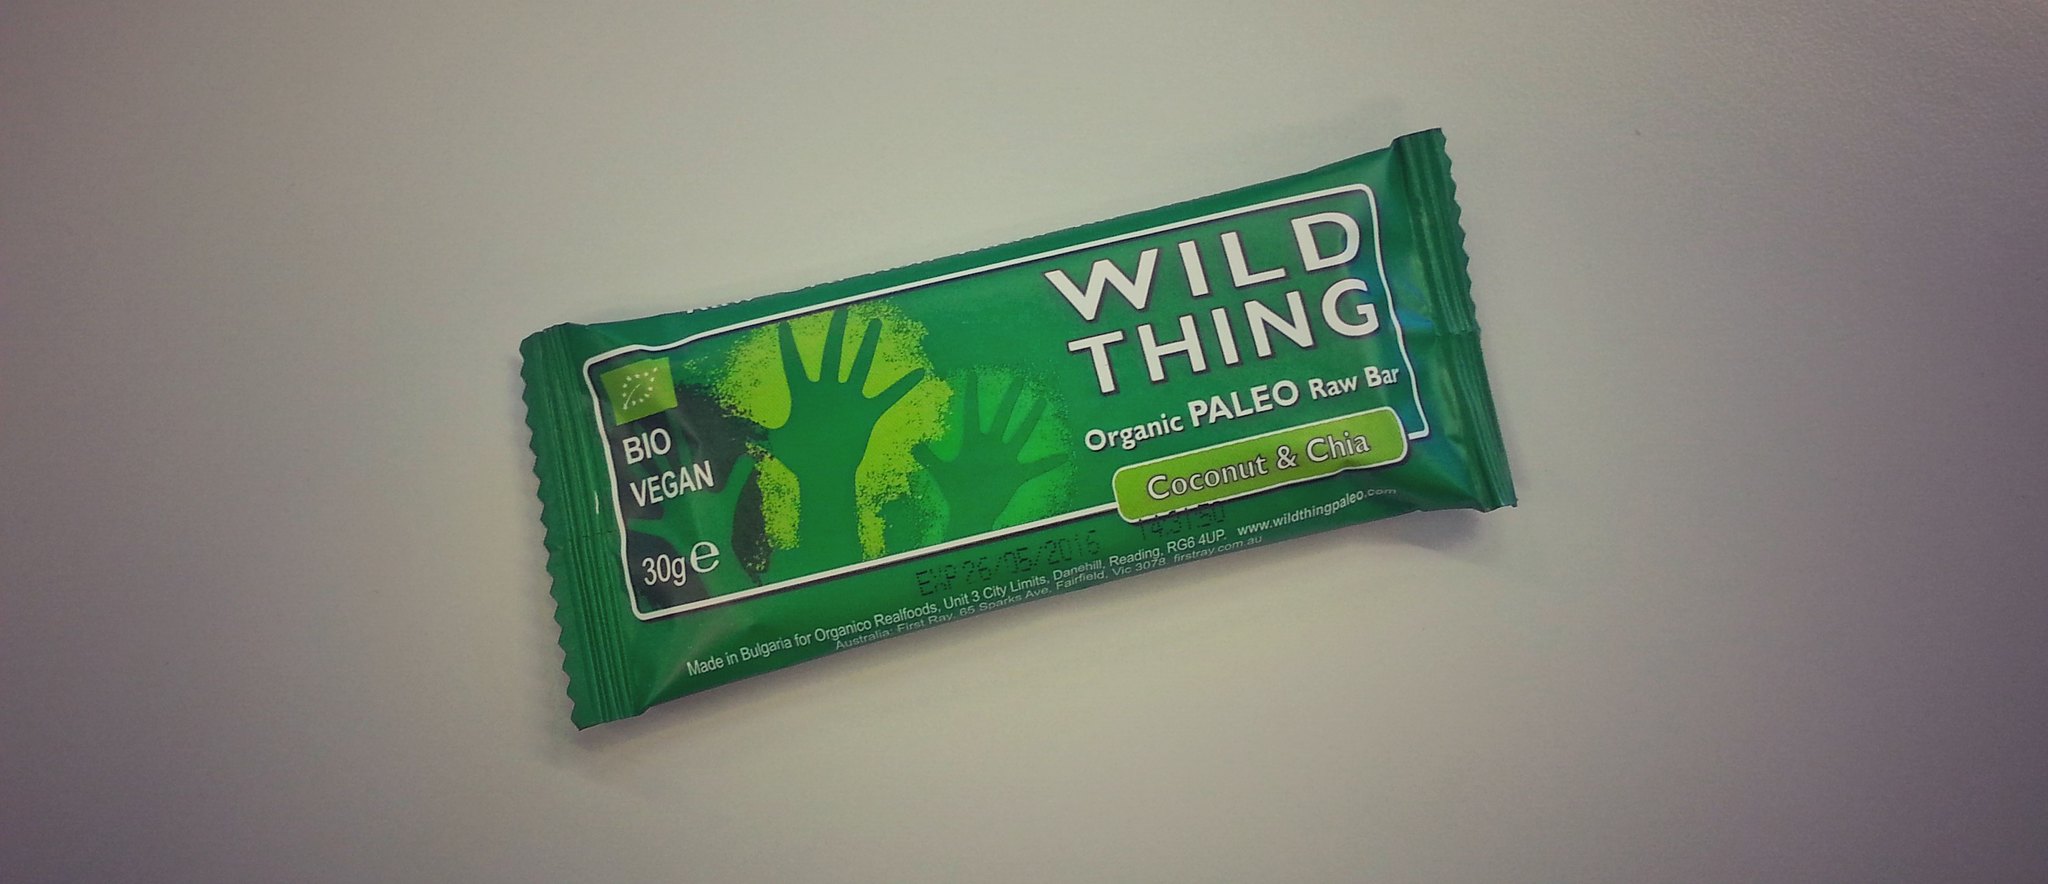 Wild Thing - Organic Paleo Raw Bar Coconut and Chia